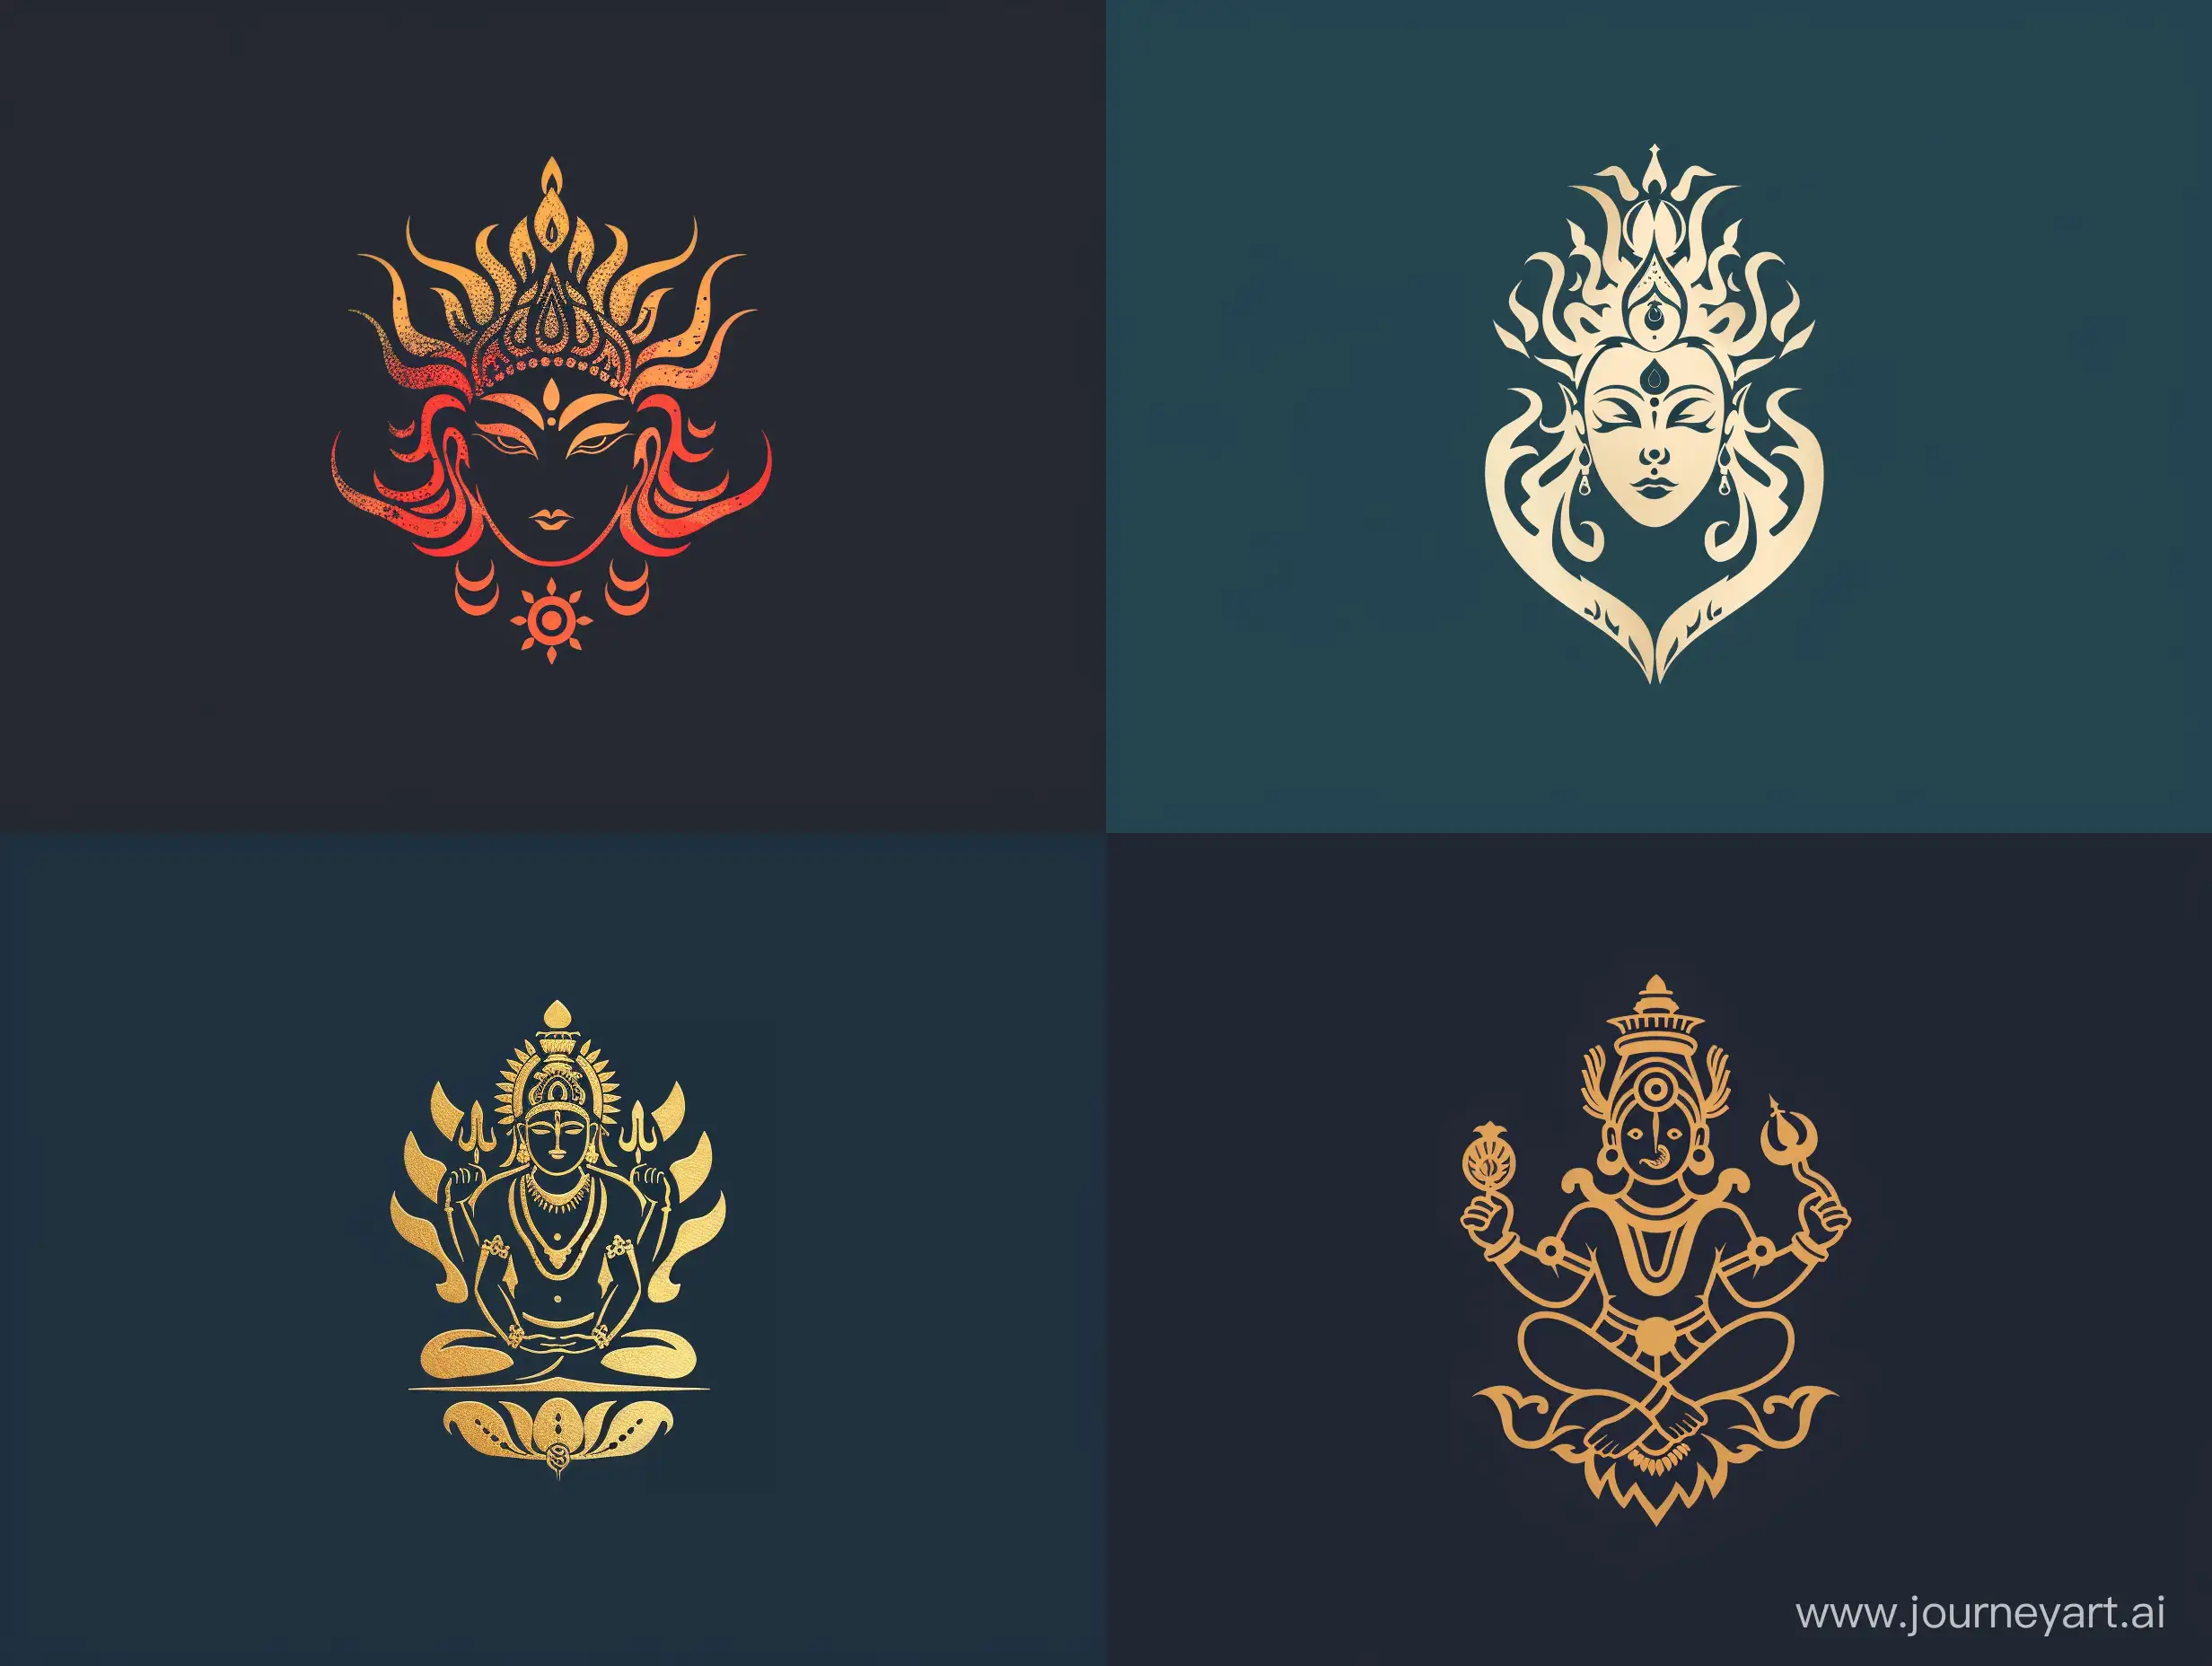 Vibrant-Indian-Mythology-Logo-with-Intricate-Details